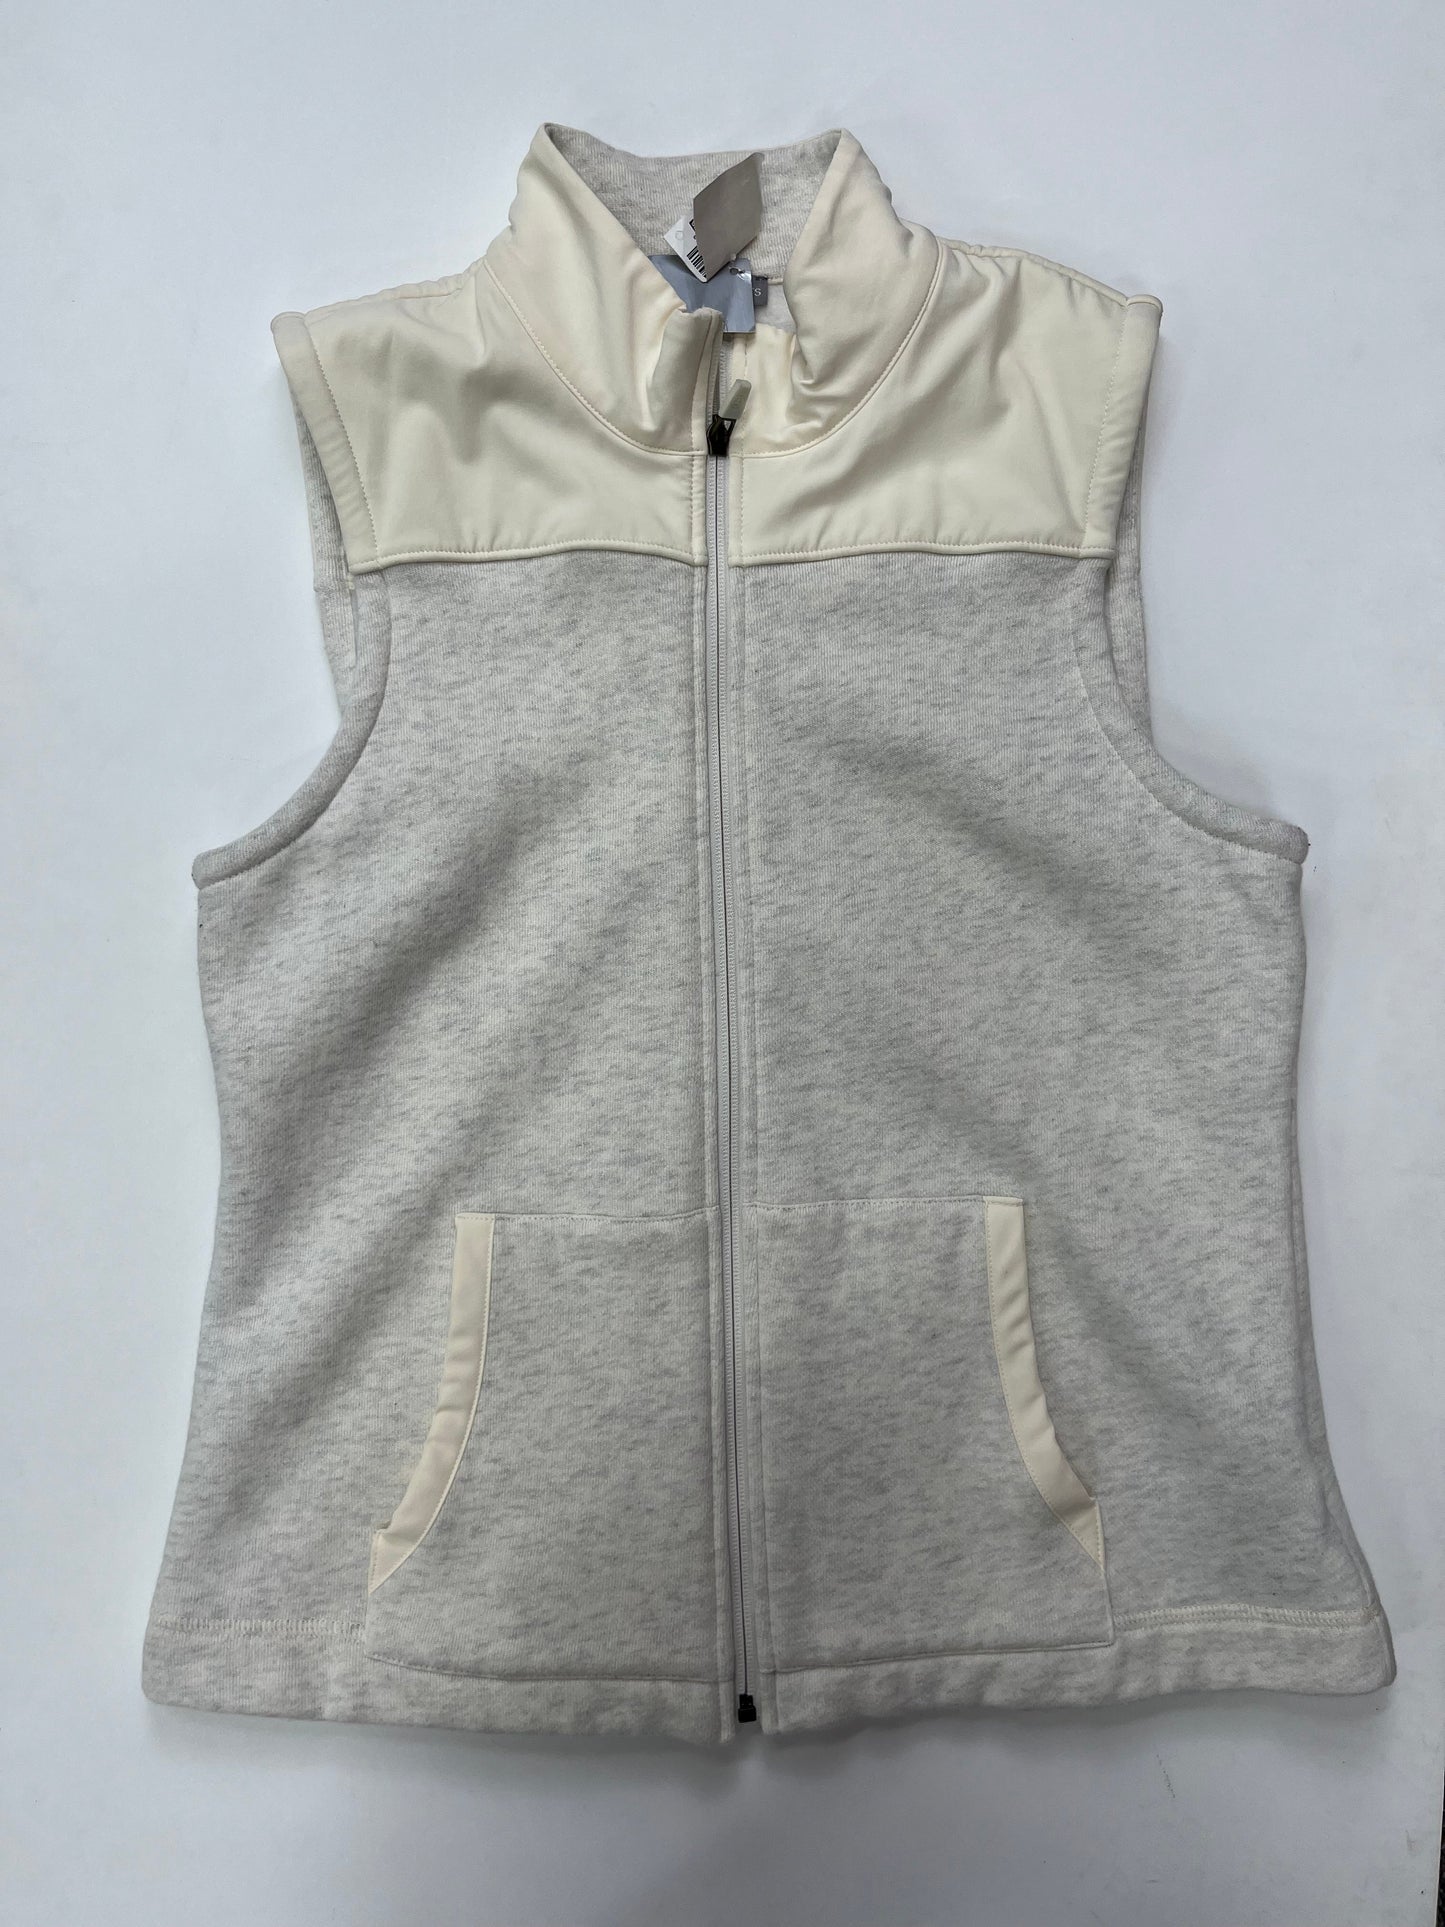 Vest Fleece By Talbots  Size: Petite  Medium